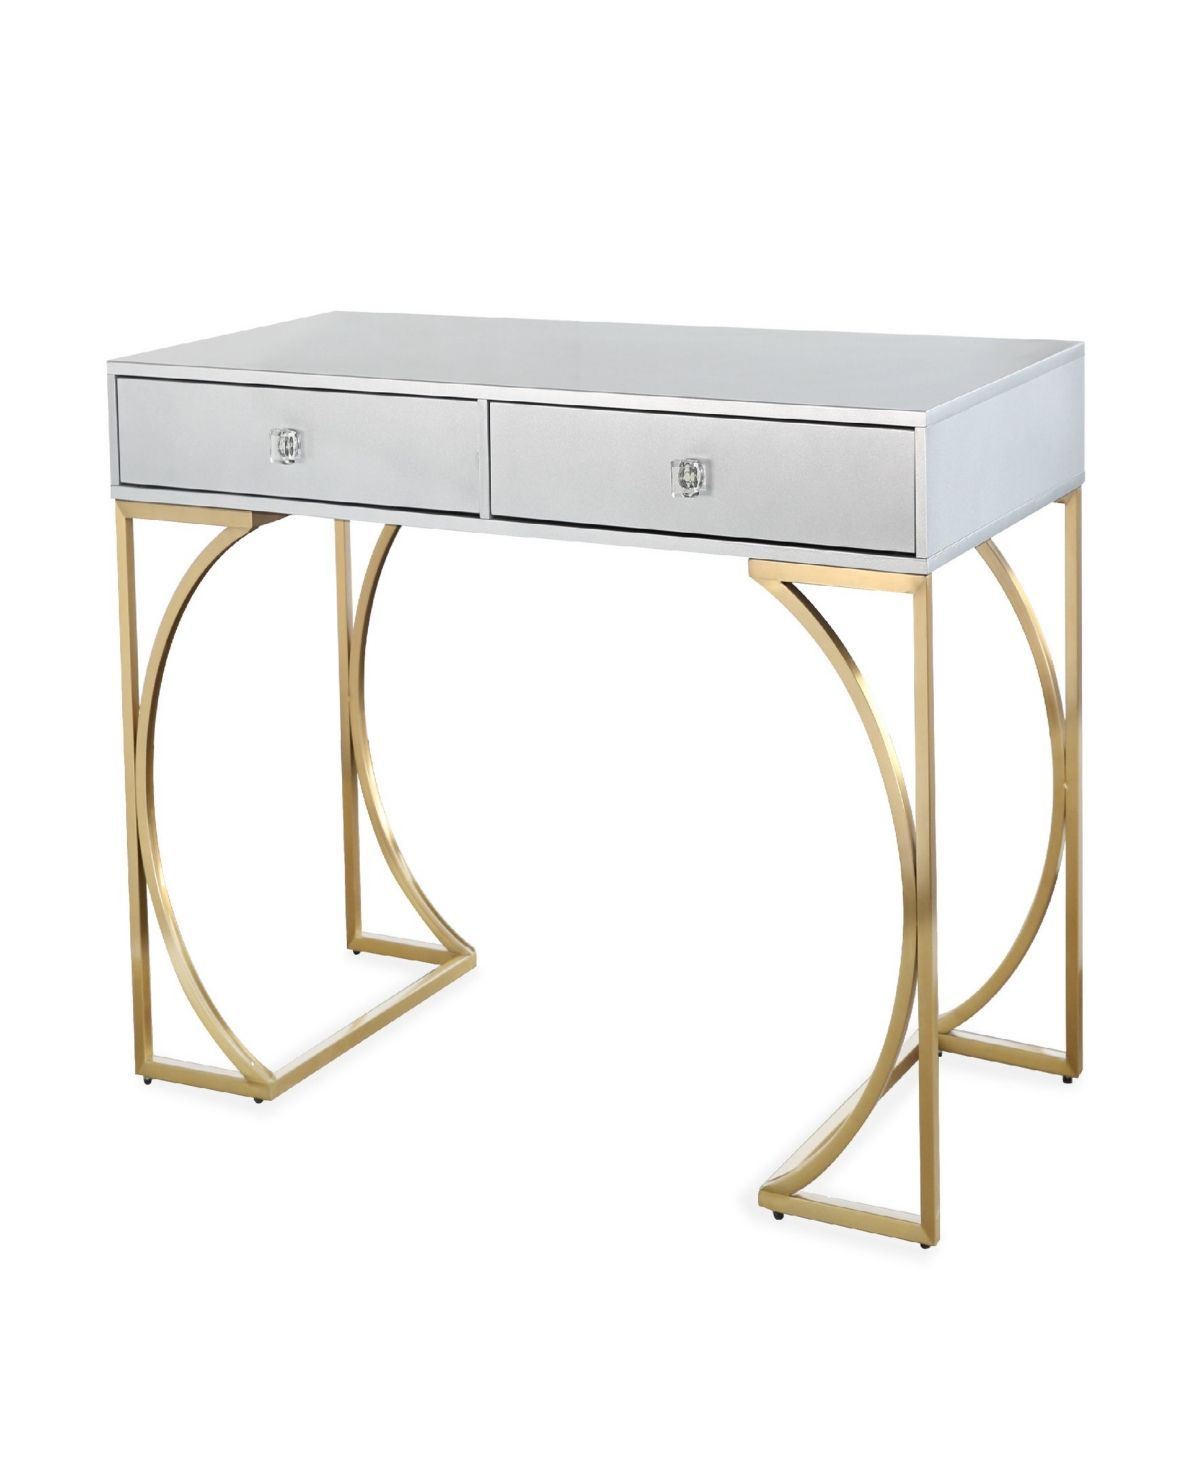 Lexie Desk – Gold | Chic Desk, Writing Desk, Furniture Regarding Gold And Wood Glam Modern Writing Desks (View 13 of 15)